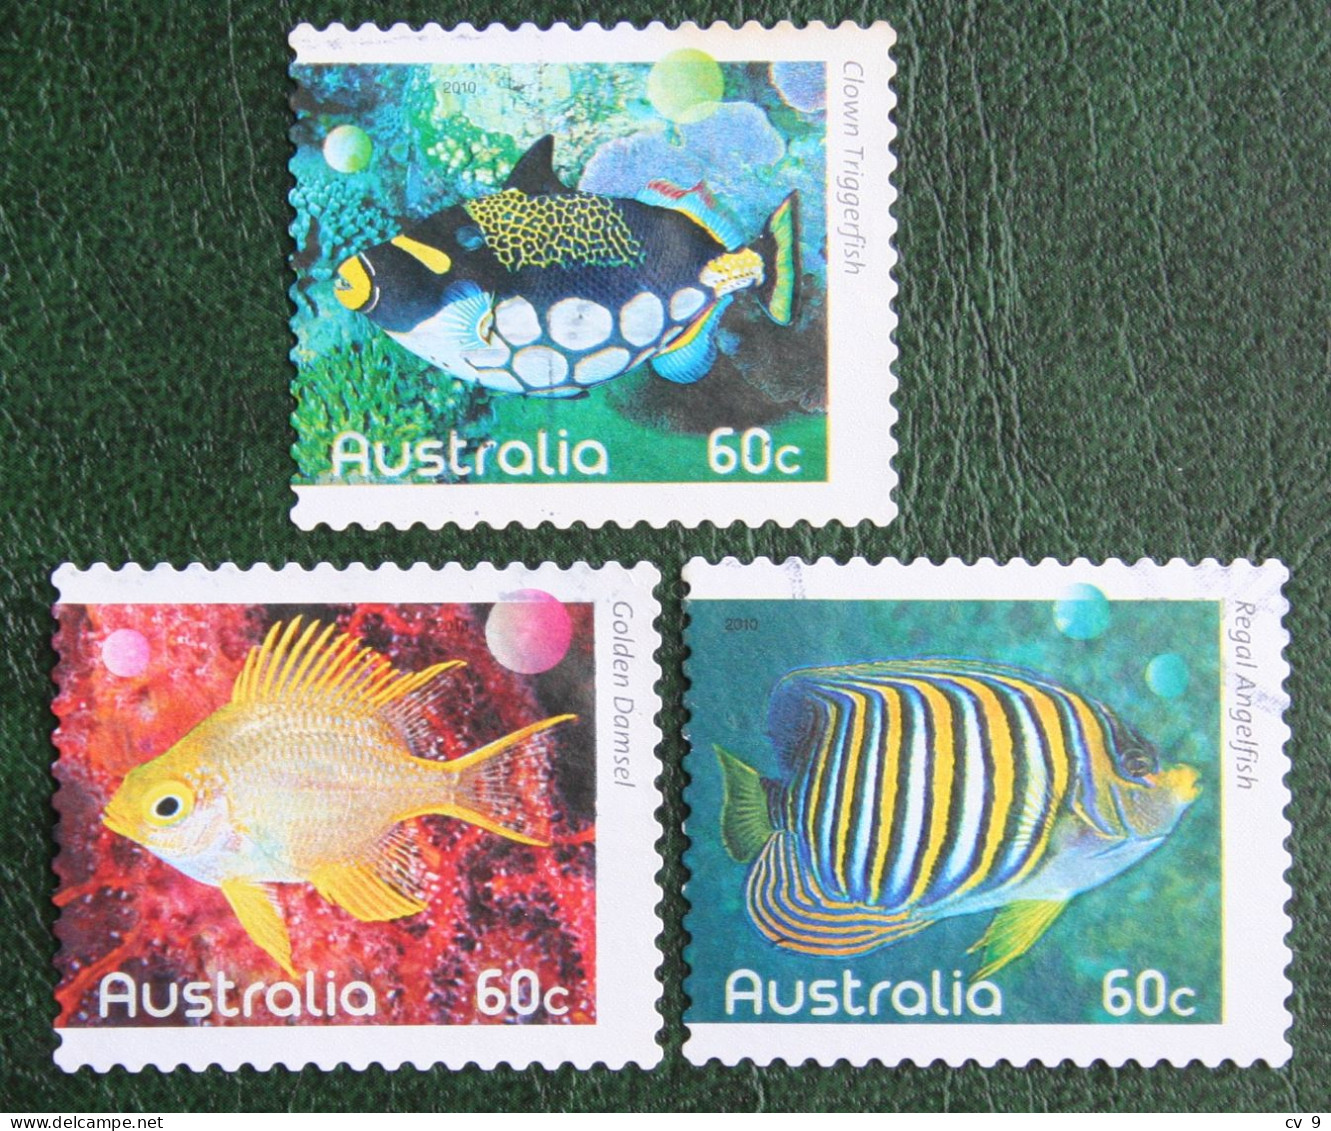 Tropical Fish FISHES OF THE REEF 2010 Mi 3401 3403-3404 Y&T - Used Gebruikt Oblitere Australia Australien Australie - Used Stamps